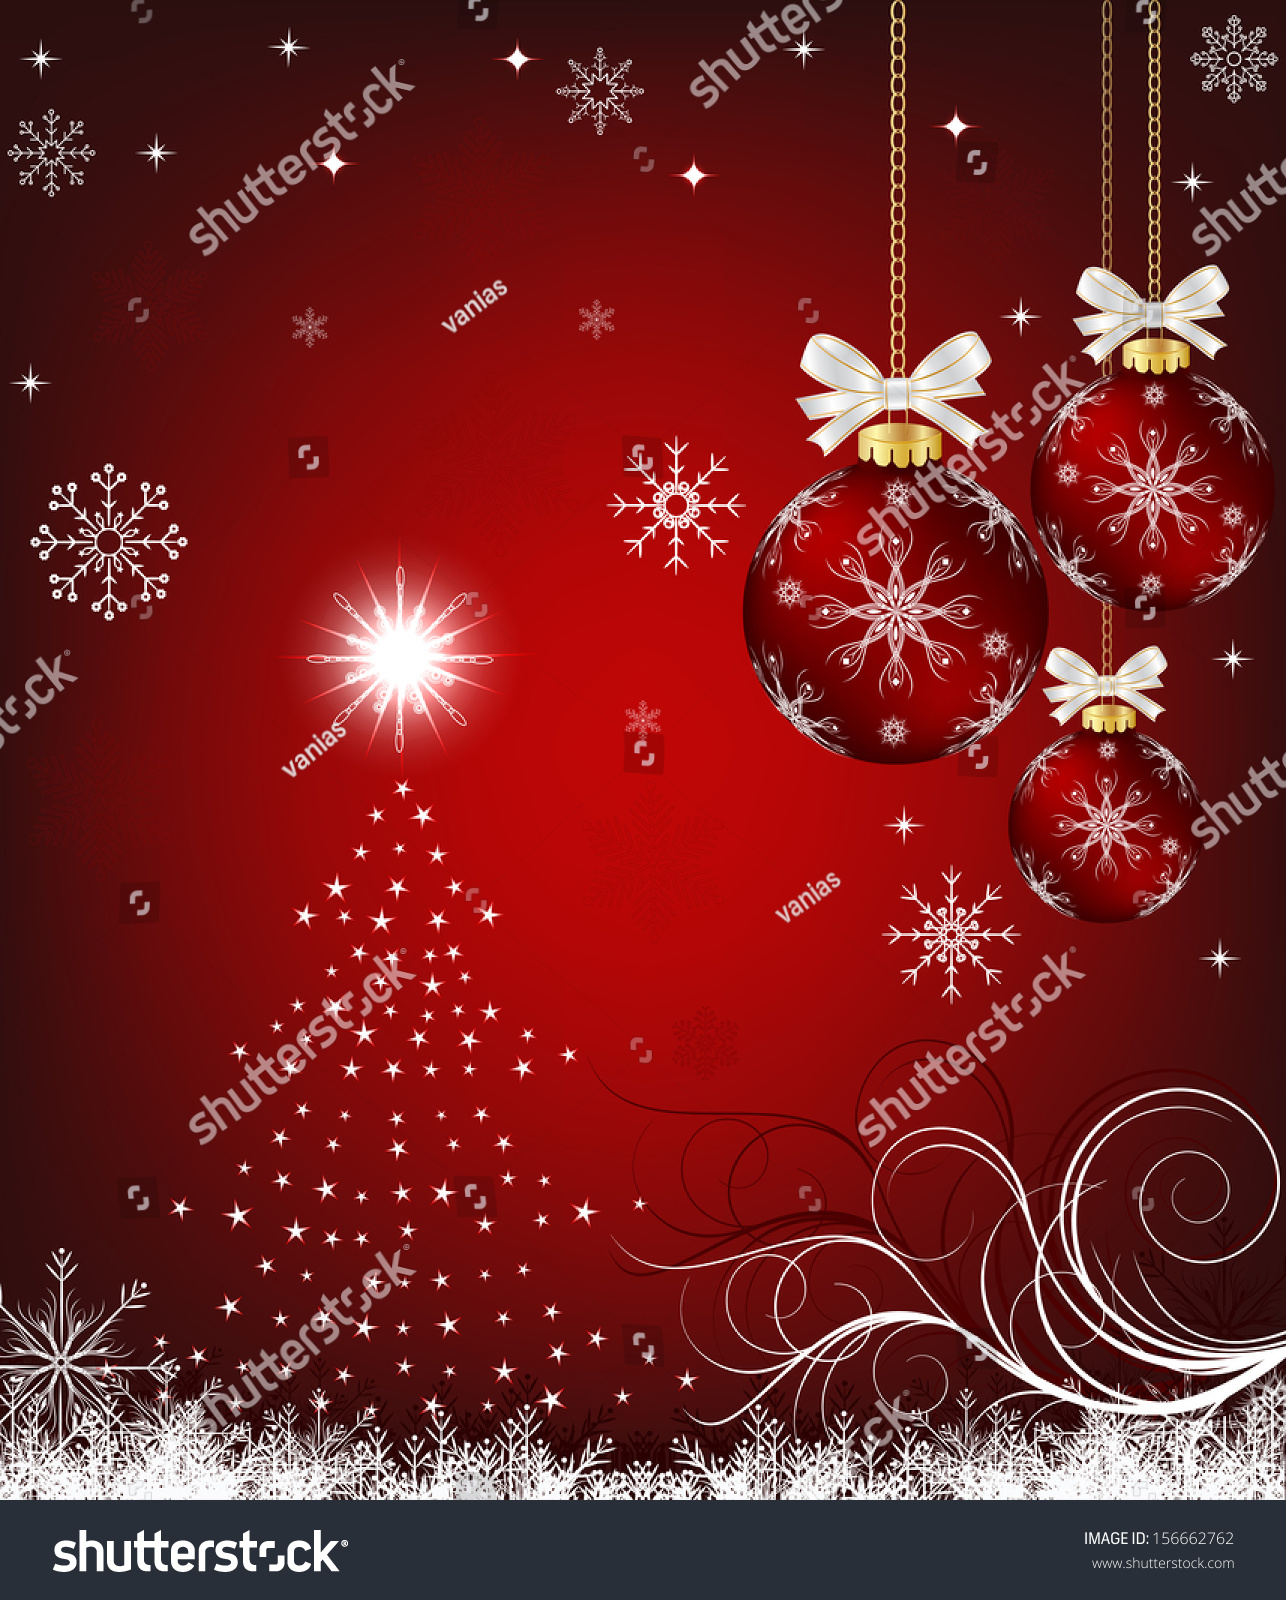 Christmas Red Background Stock Vector Illustration 156662762 : Shutterstock